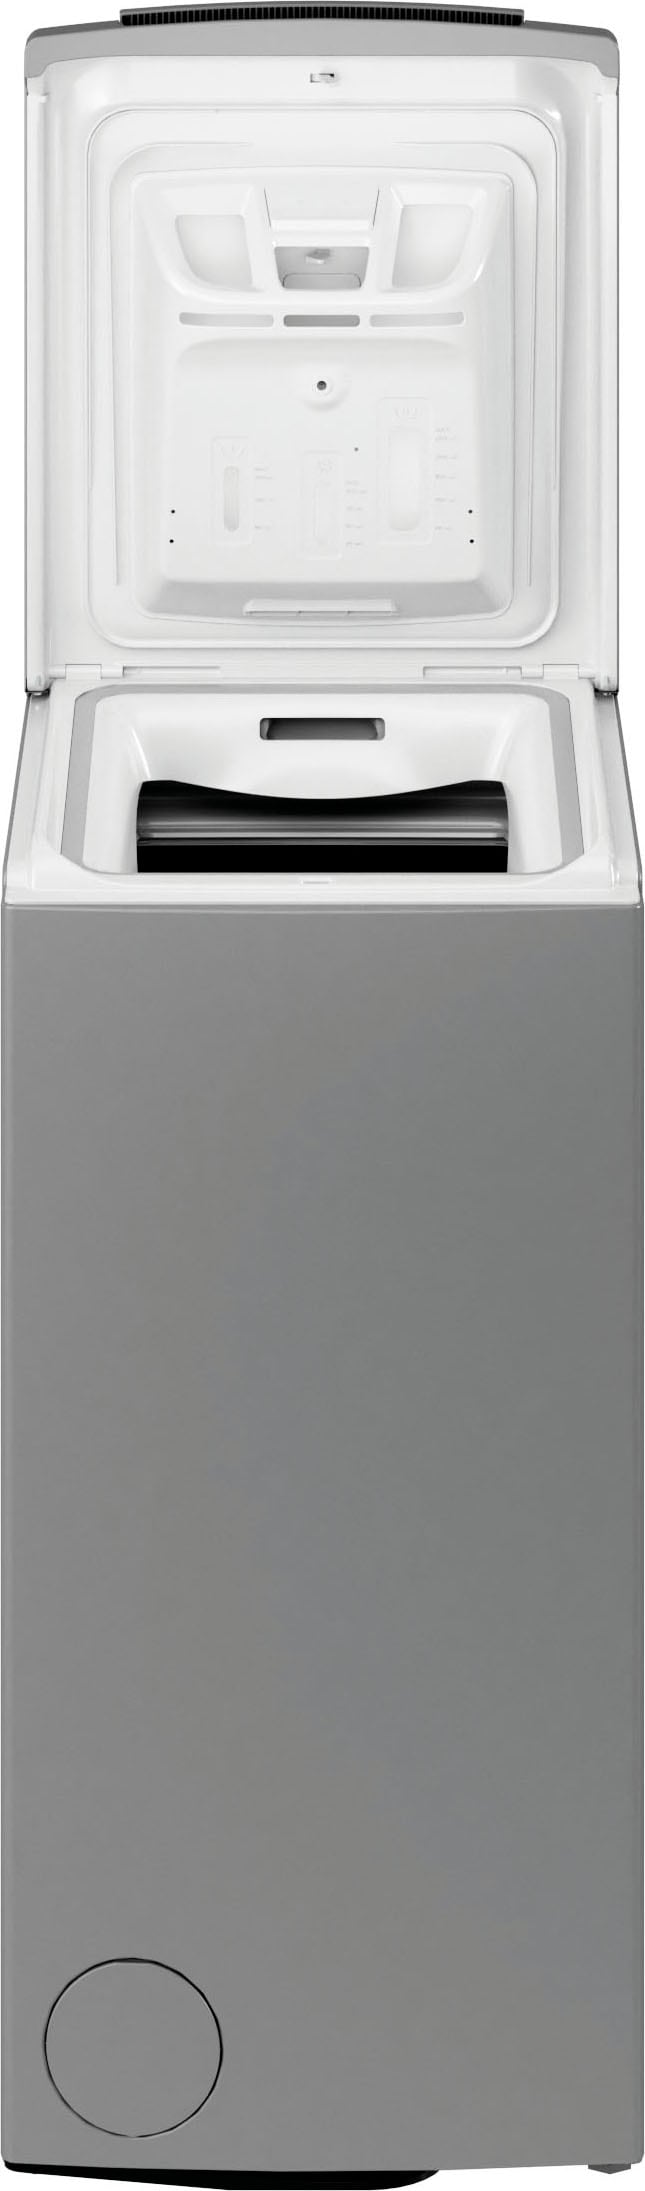 BAUKNECHT Waschmaschine Toplader »WMT 6513 D4«, WMT 6513 D4, 6,5 kg, 1300 U/ min online bei